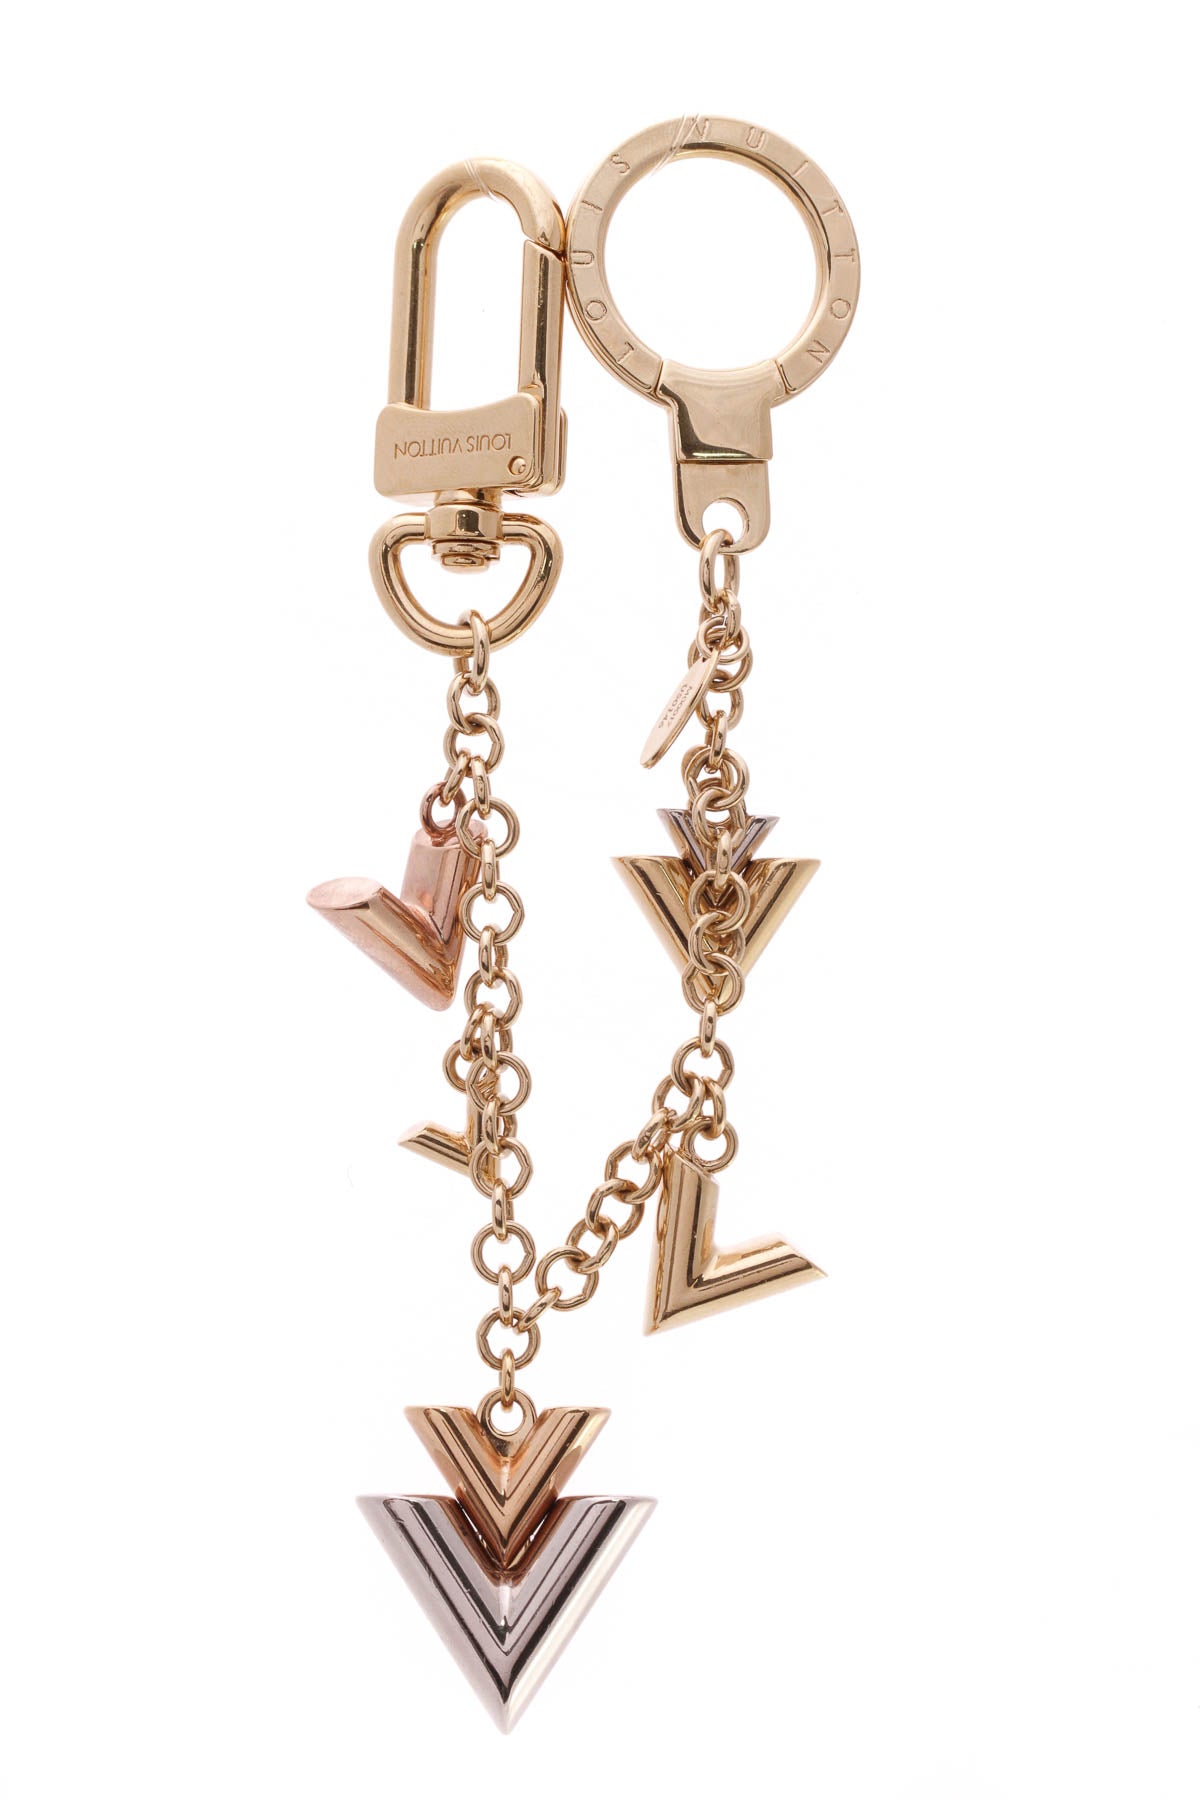 Louis Vuitton Jingle V Chain Bag Charm - Silver/Gold – Couture USA